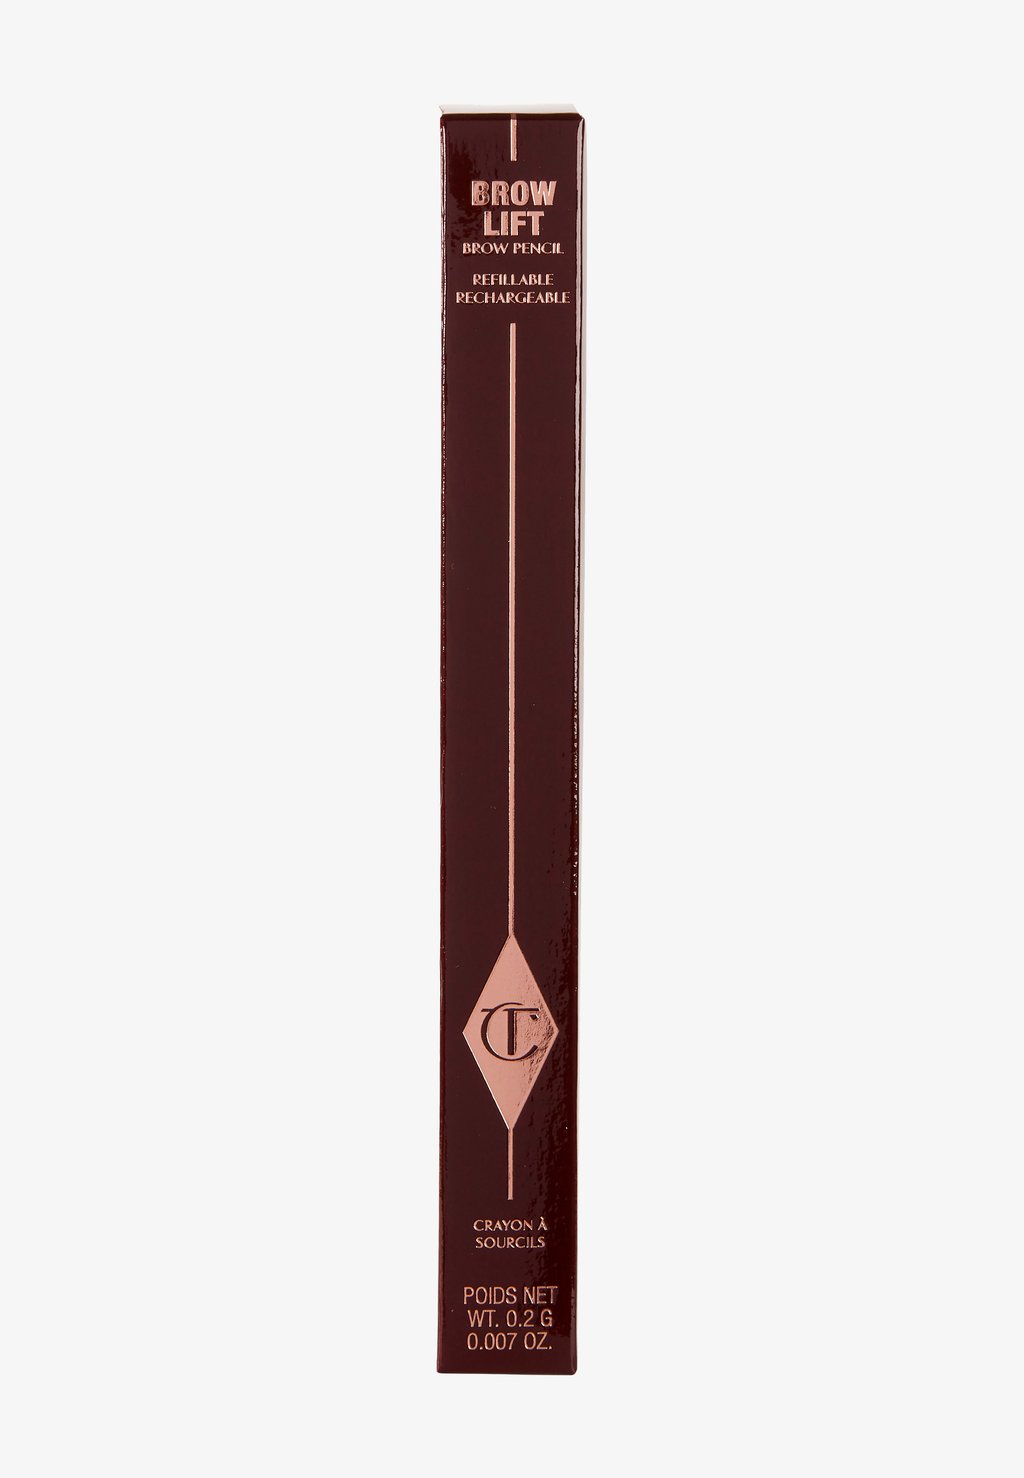 Карандаш для бровей BROW LIFT Charlotte Tilbury, цвет black brown карандаш для бровей charlotte tilbury brow lift оттенок natural brown